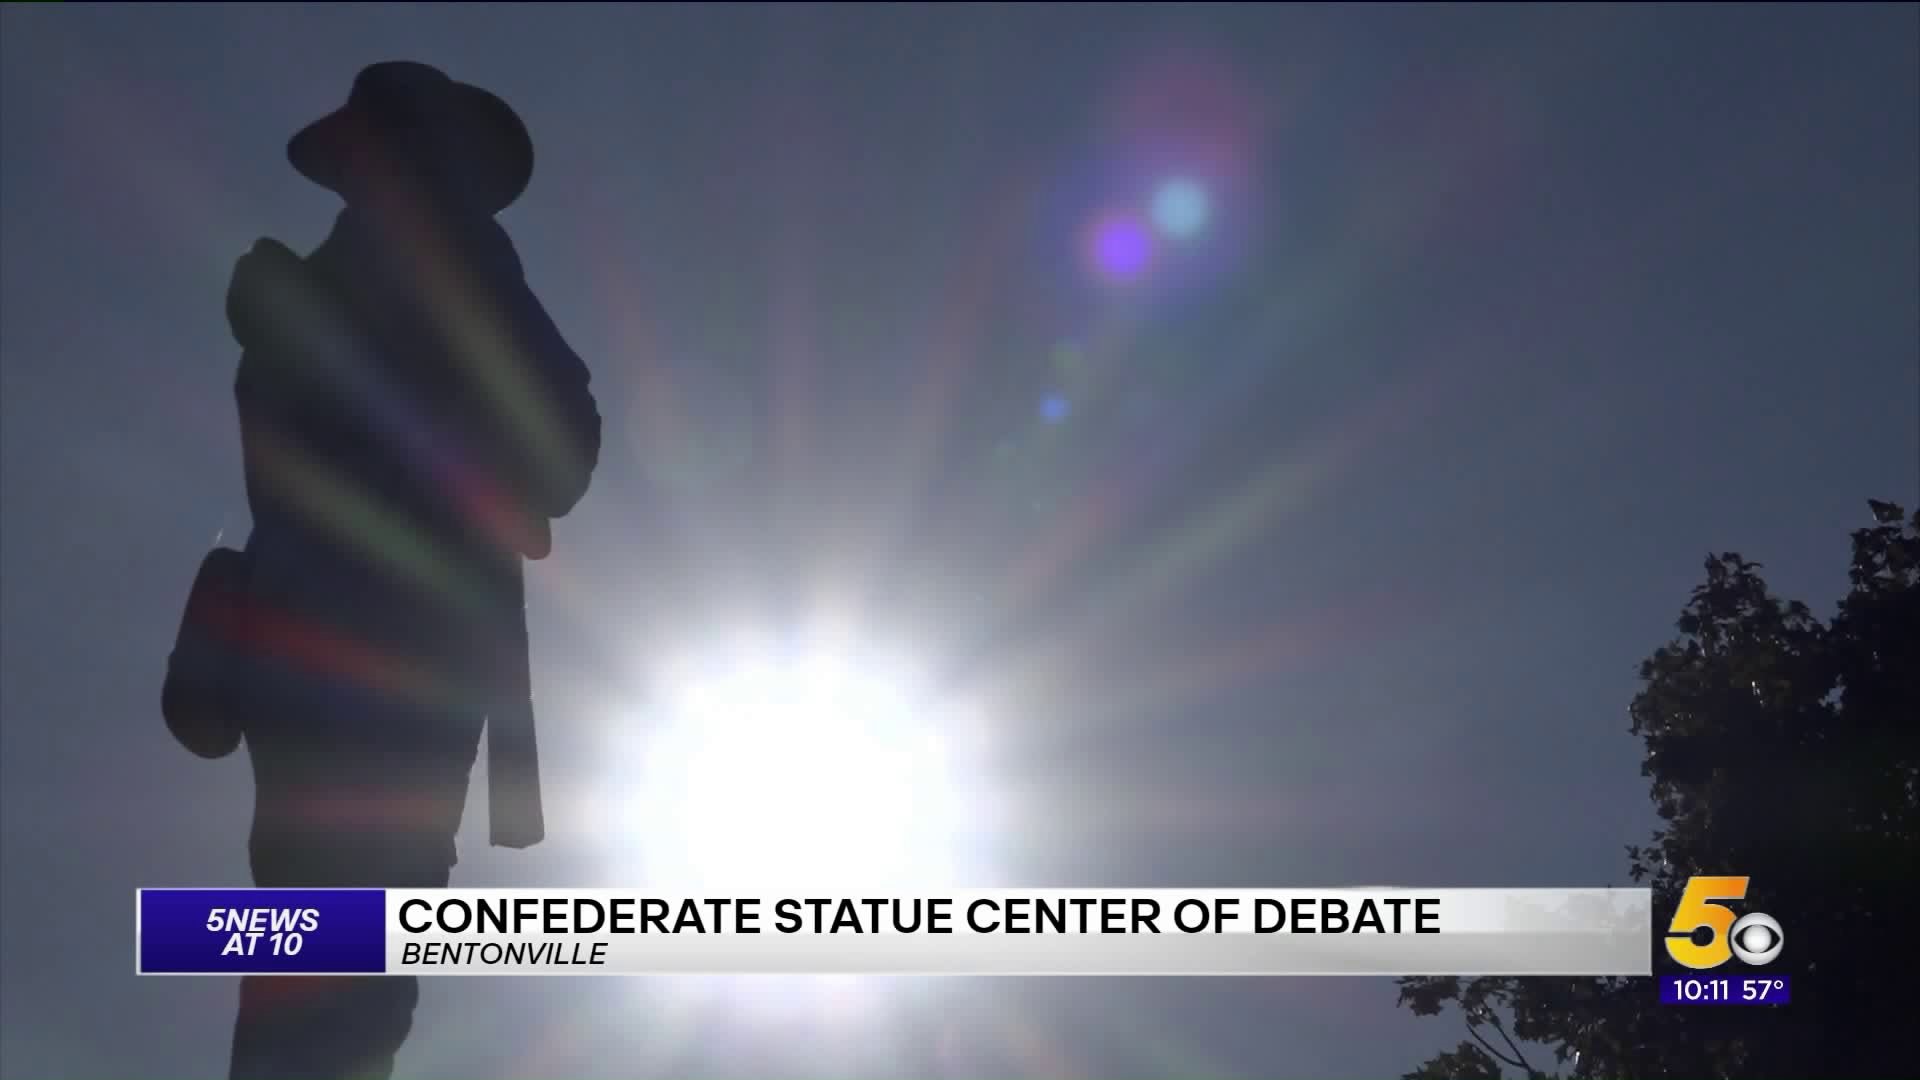 Locals Debate About Bentonville Confederate Statue